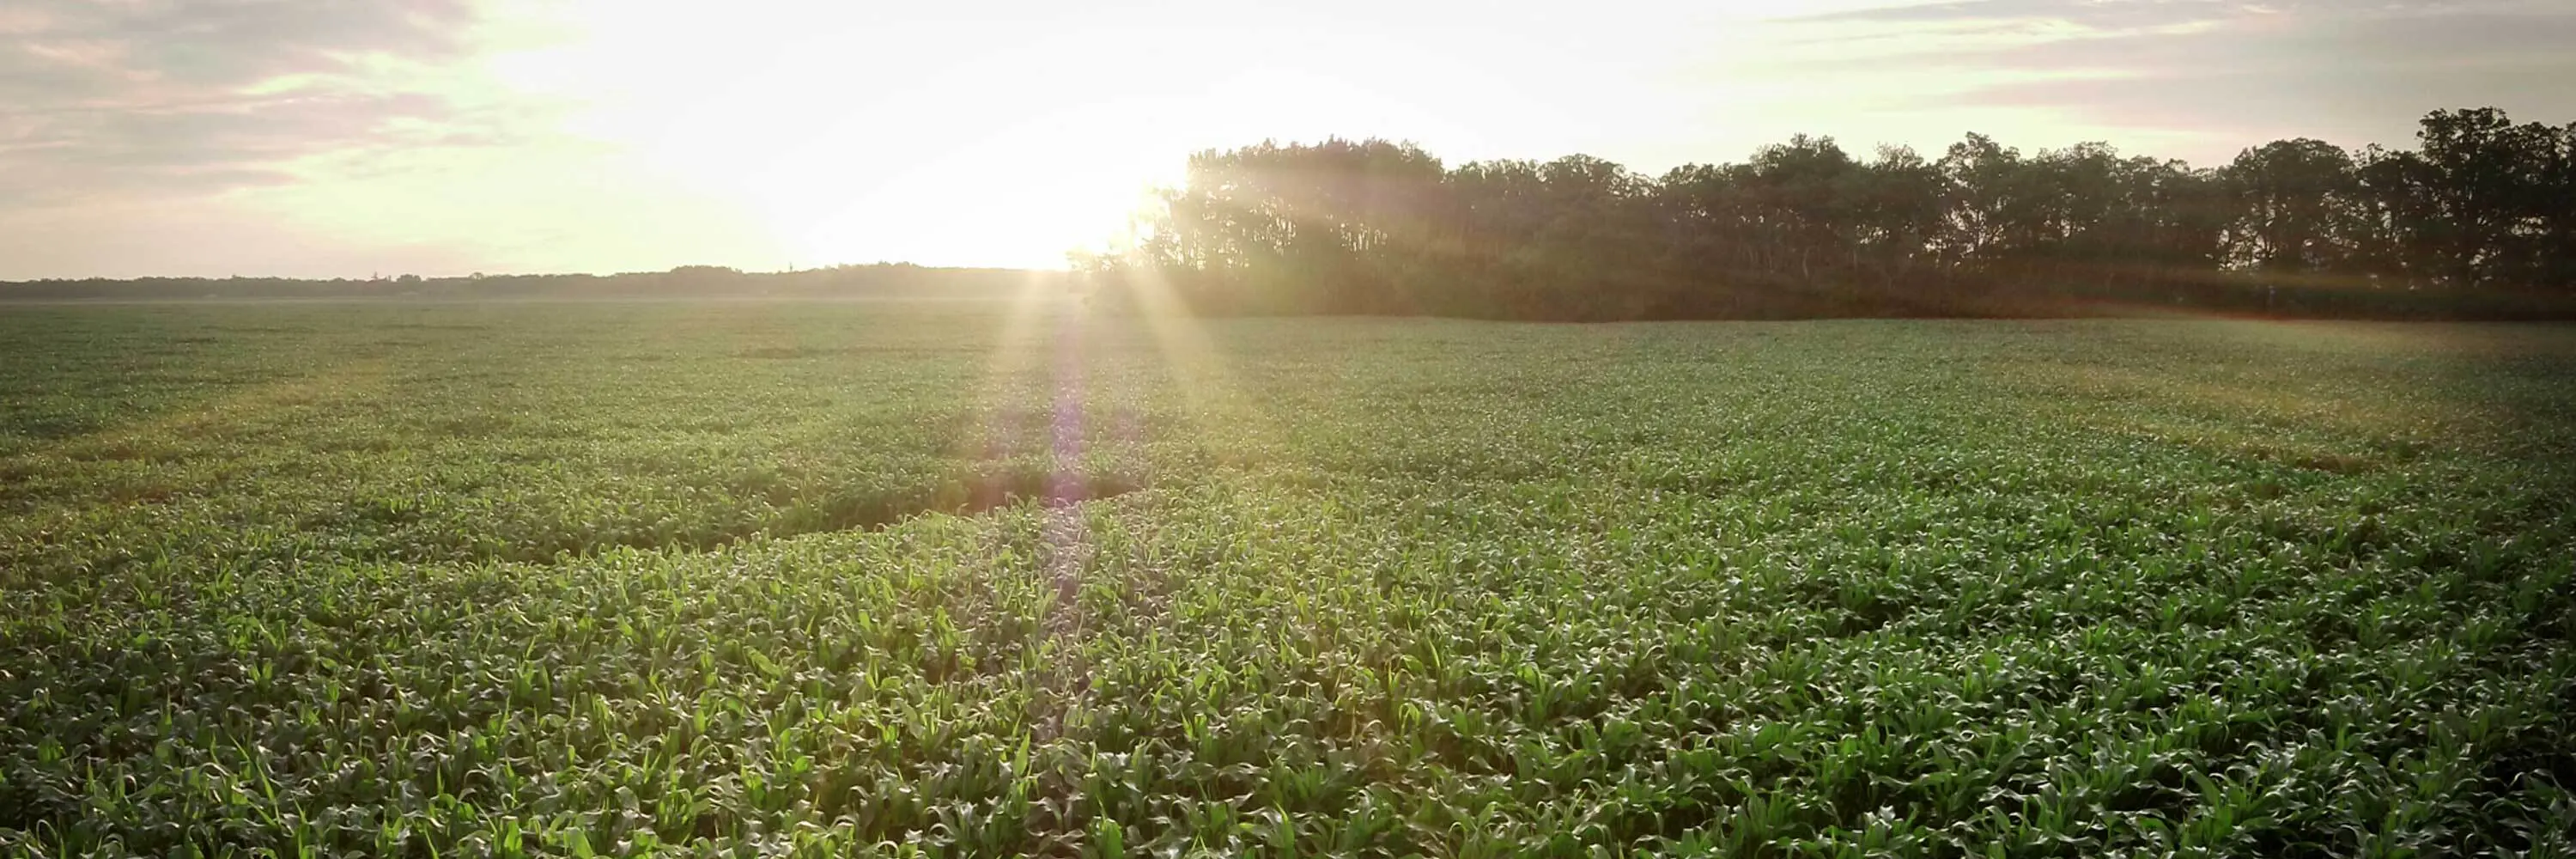 The sun is shining through a field of corn.